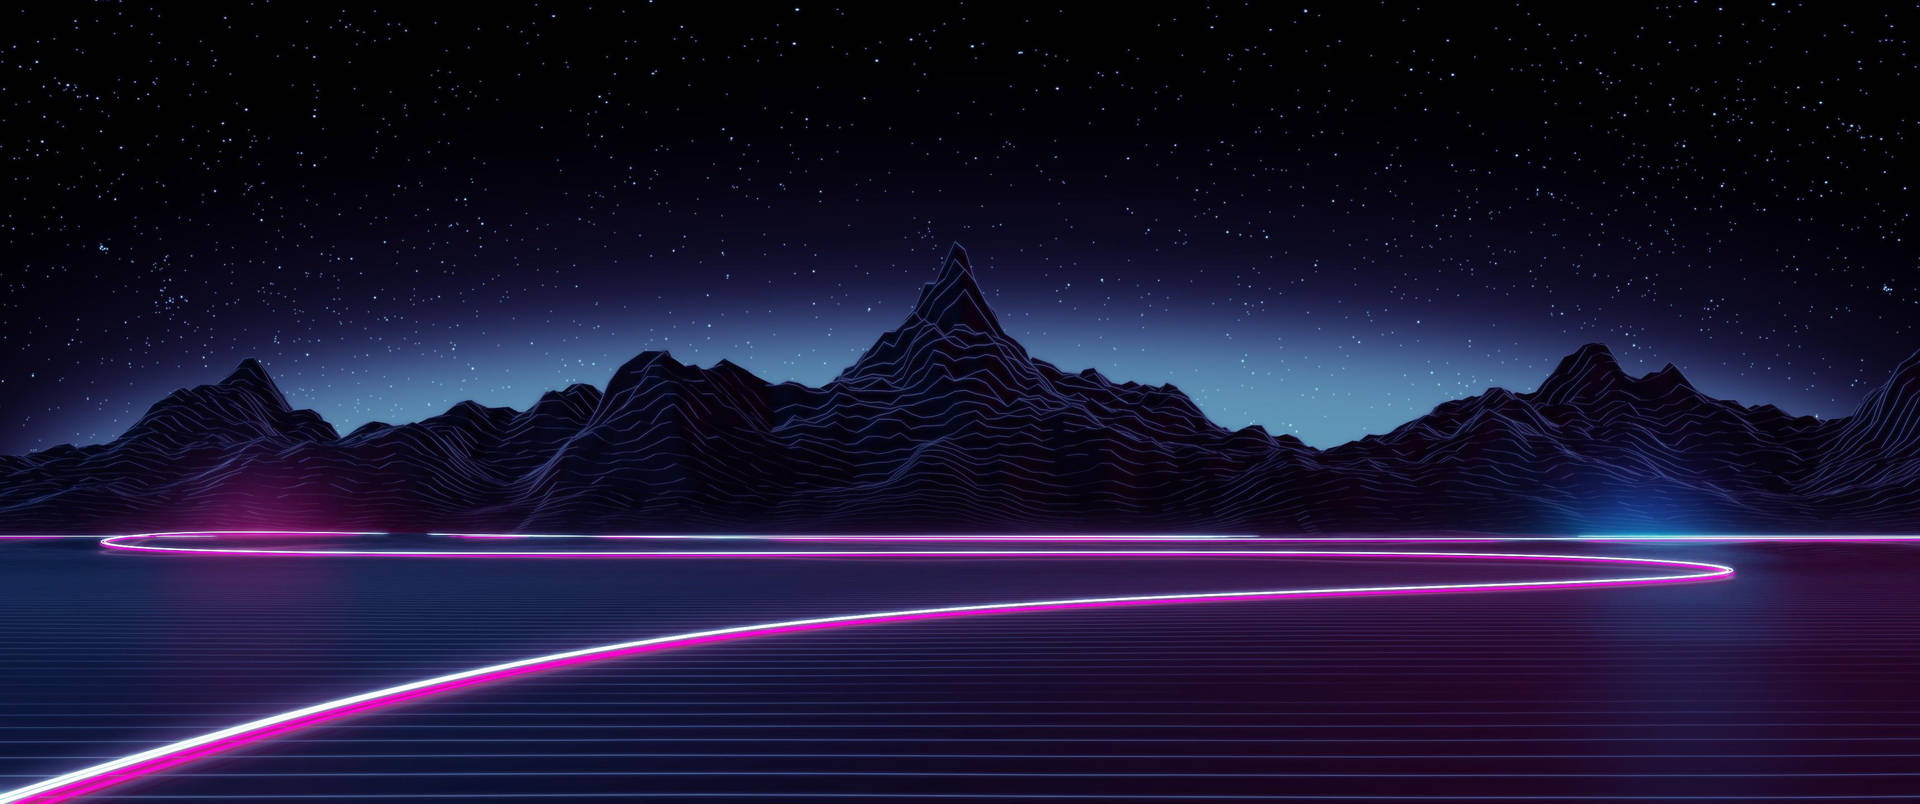 Neon Aesthetic Tumblr Mountain Scenery Wallpaper